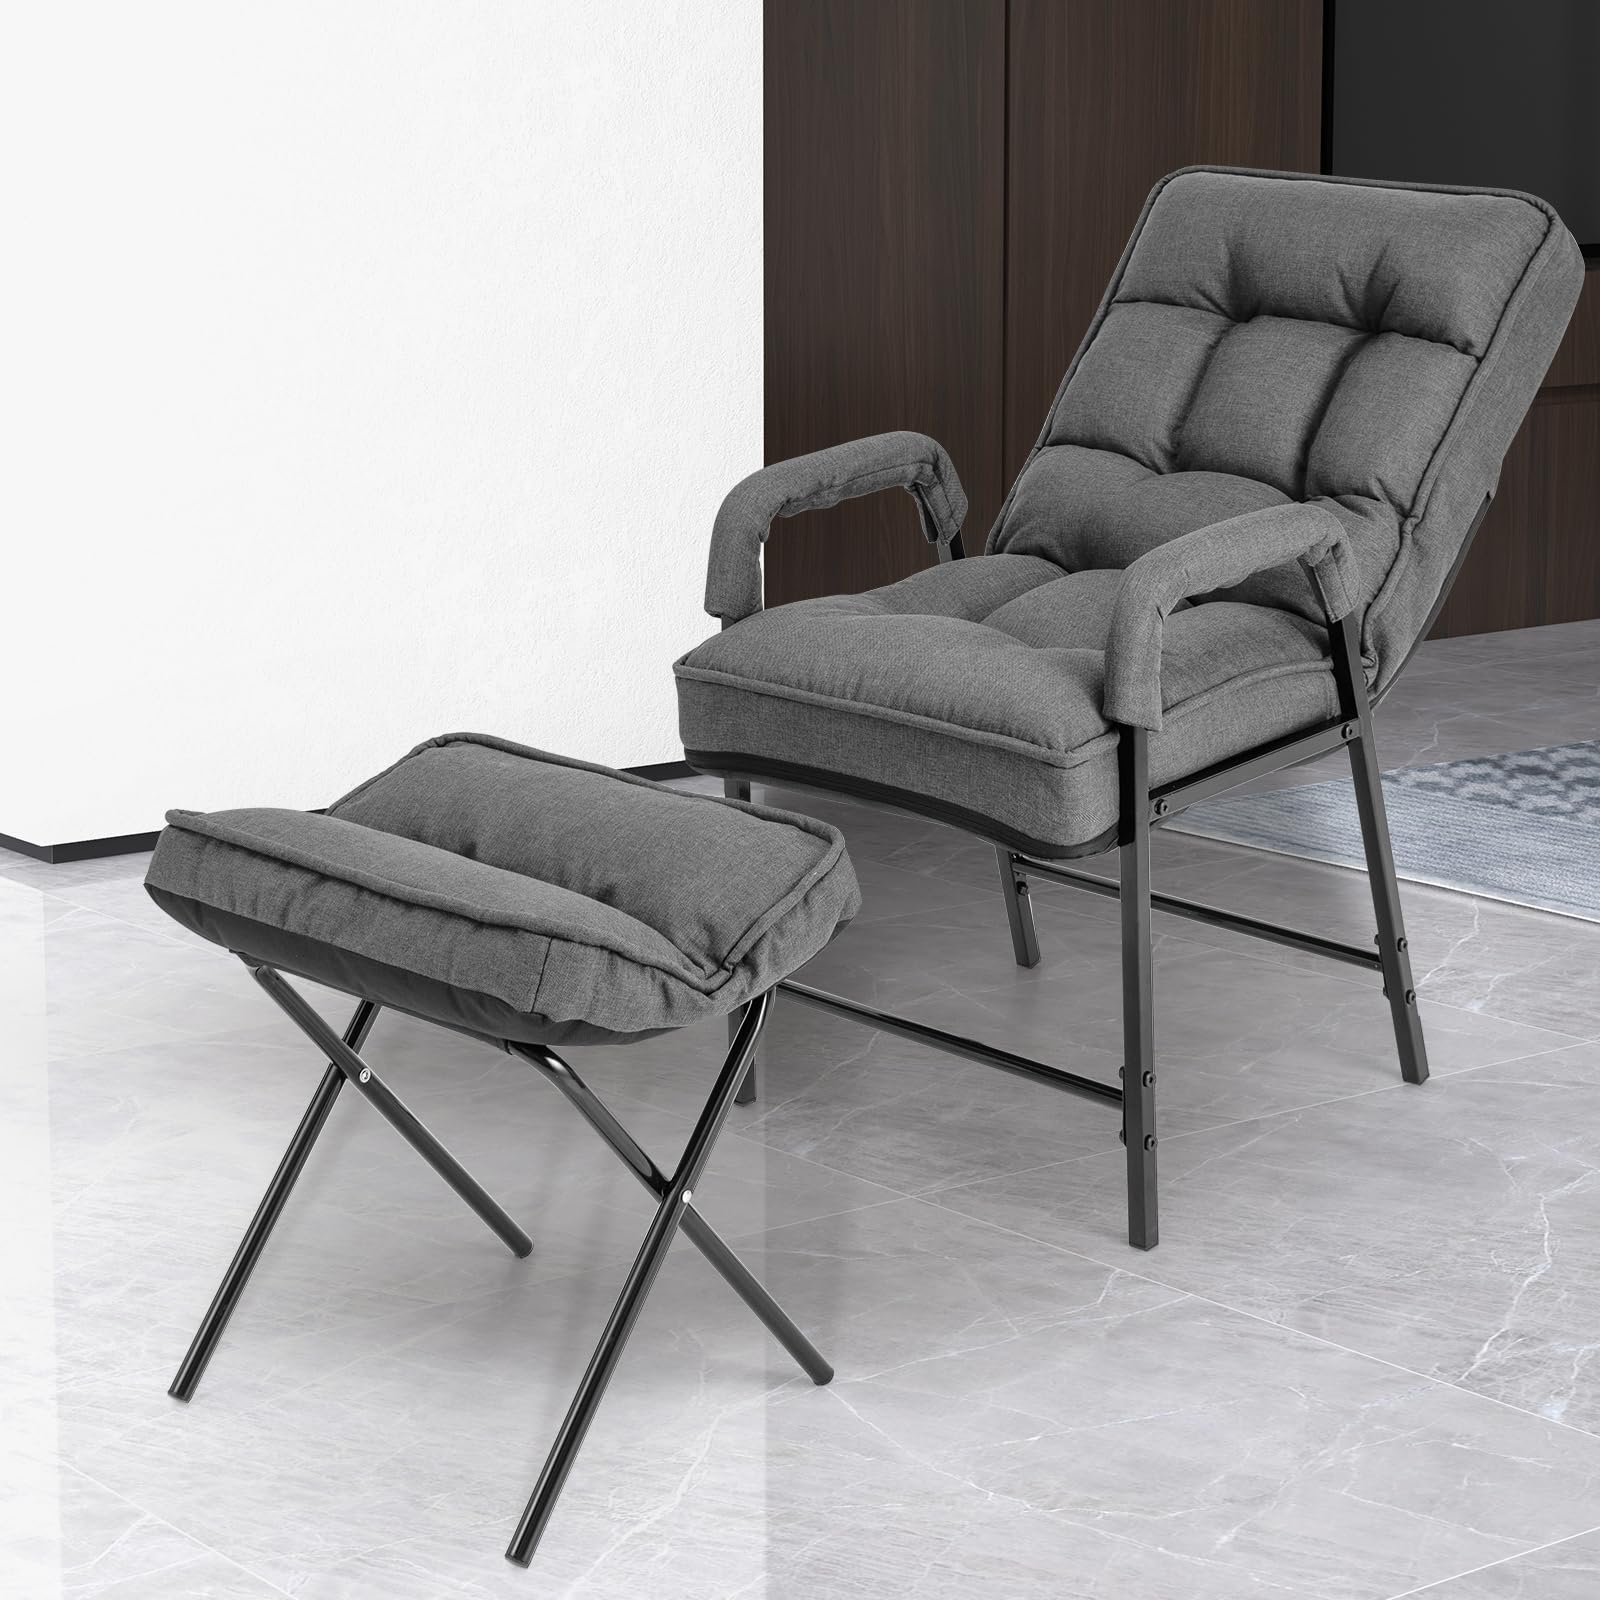 Giantex Modern Accent Chair with Ottoman